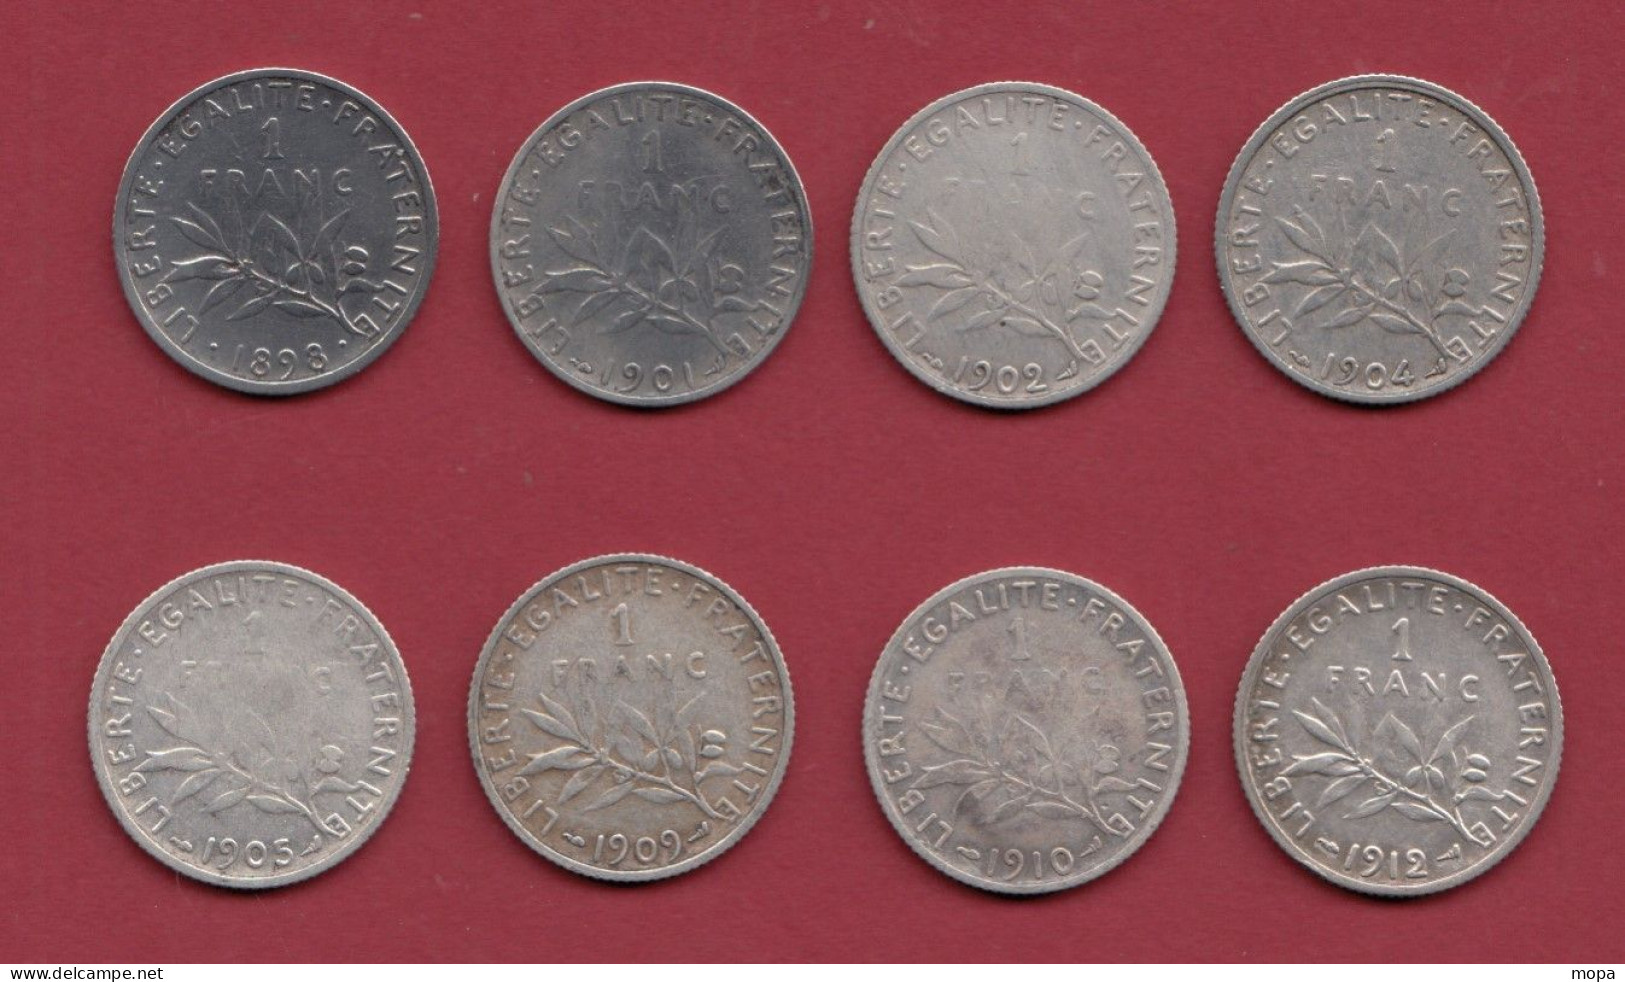 15 Pièces De 1 Franc "Semeuse" --Argent --1898-1901-02-04-05-09-10-12-13-14-16-17-18-19-20 Dans L 'état - 1 Franc